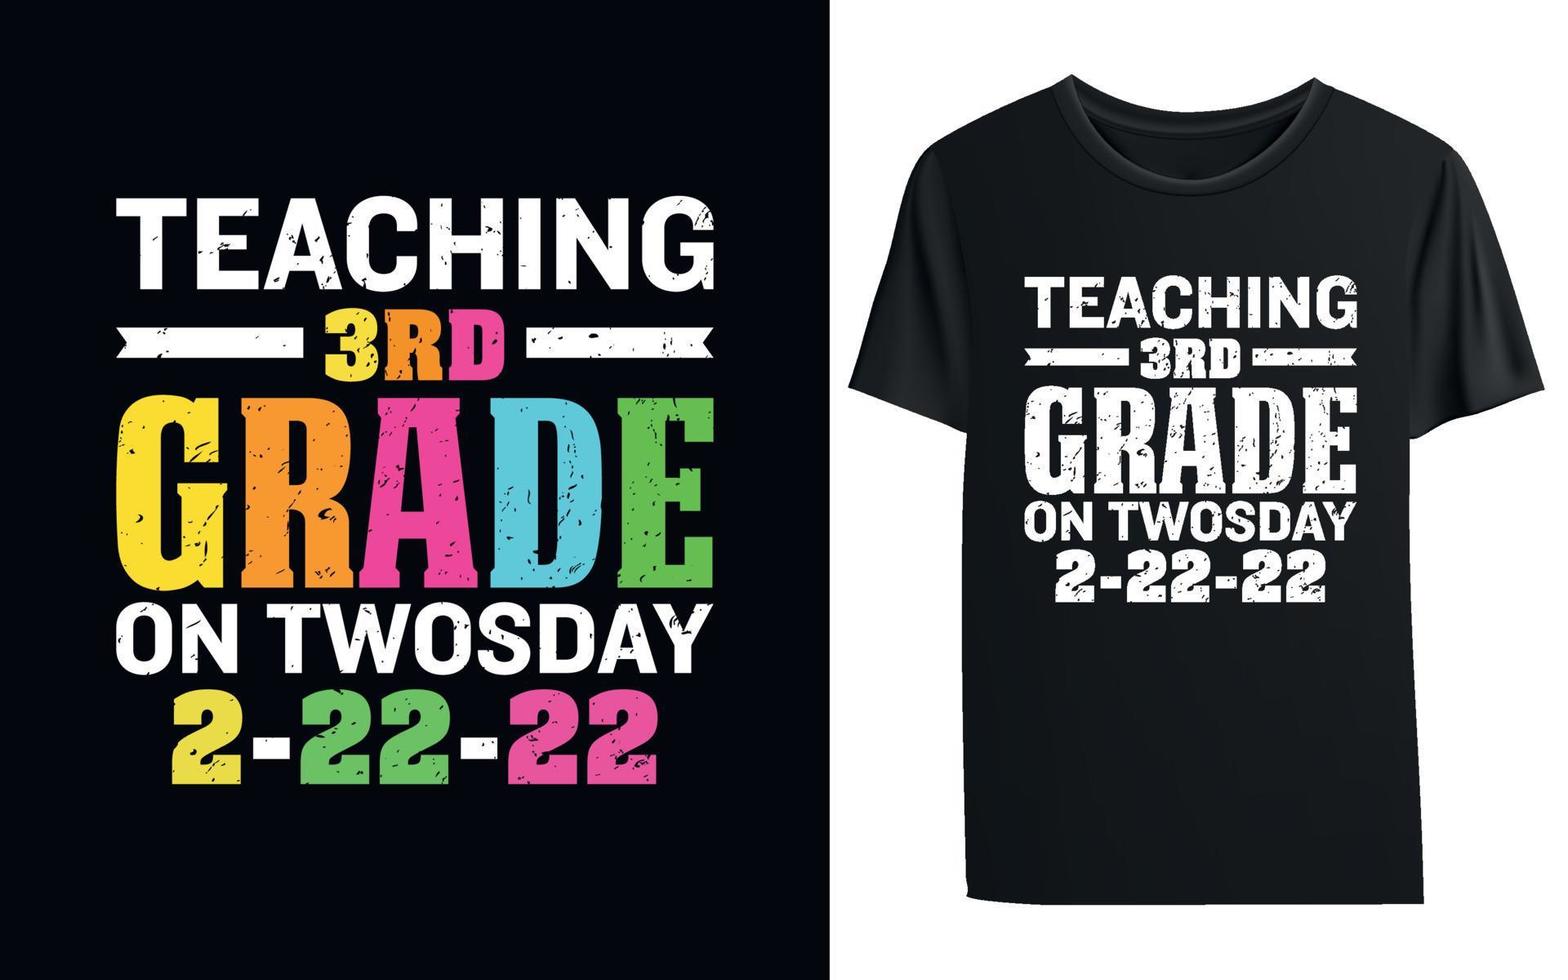 Teaching 3rd Grade On Twosday 2-22-22 T-shirt Template vector